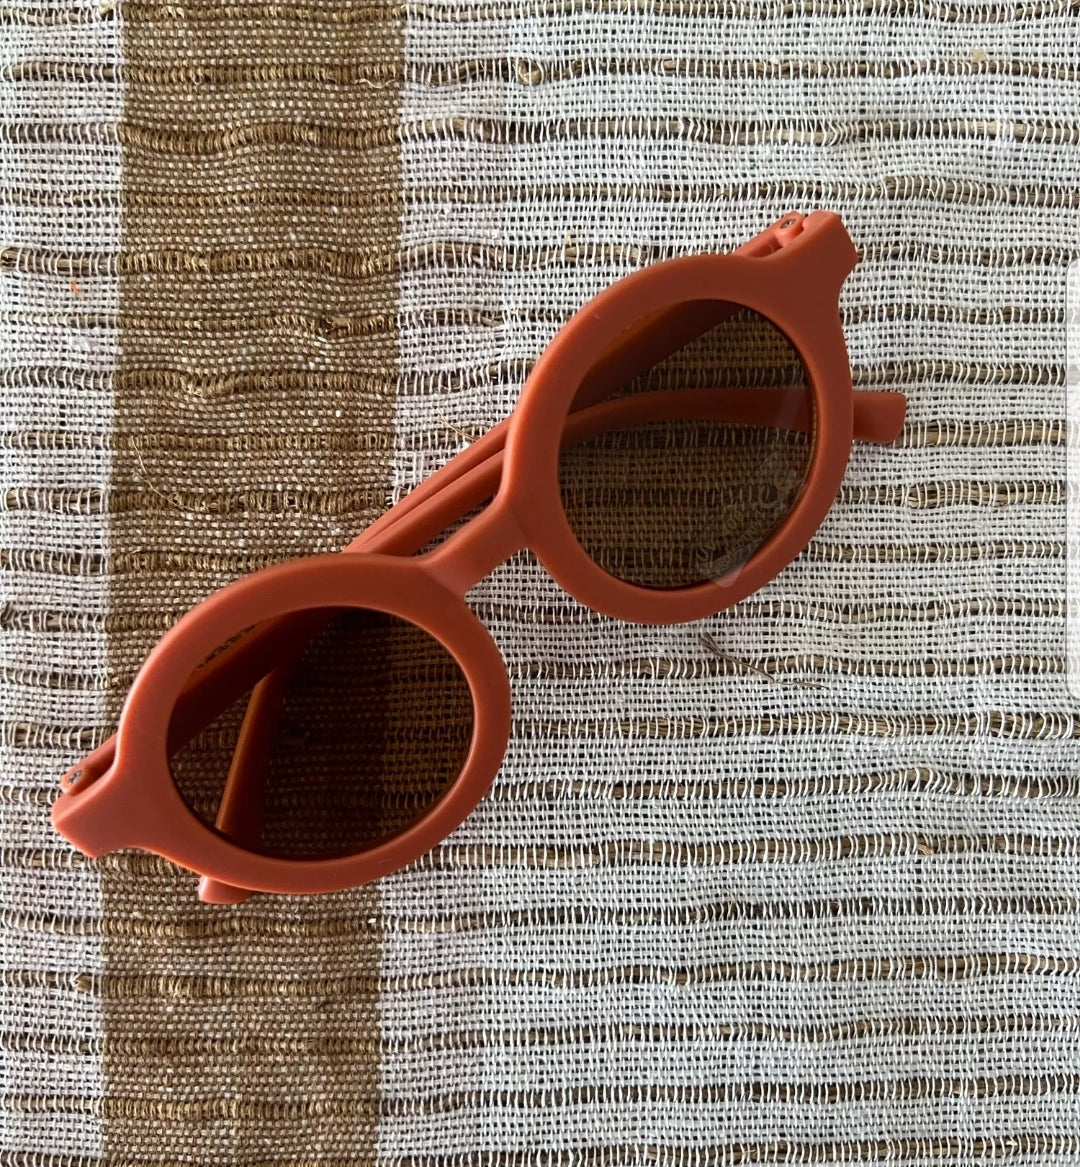 Retro Round Sunglasses / Eyewear